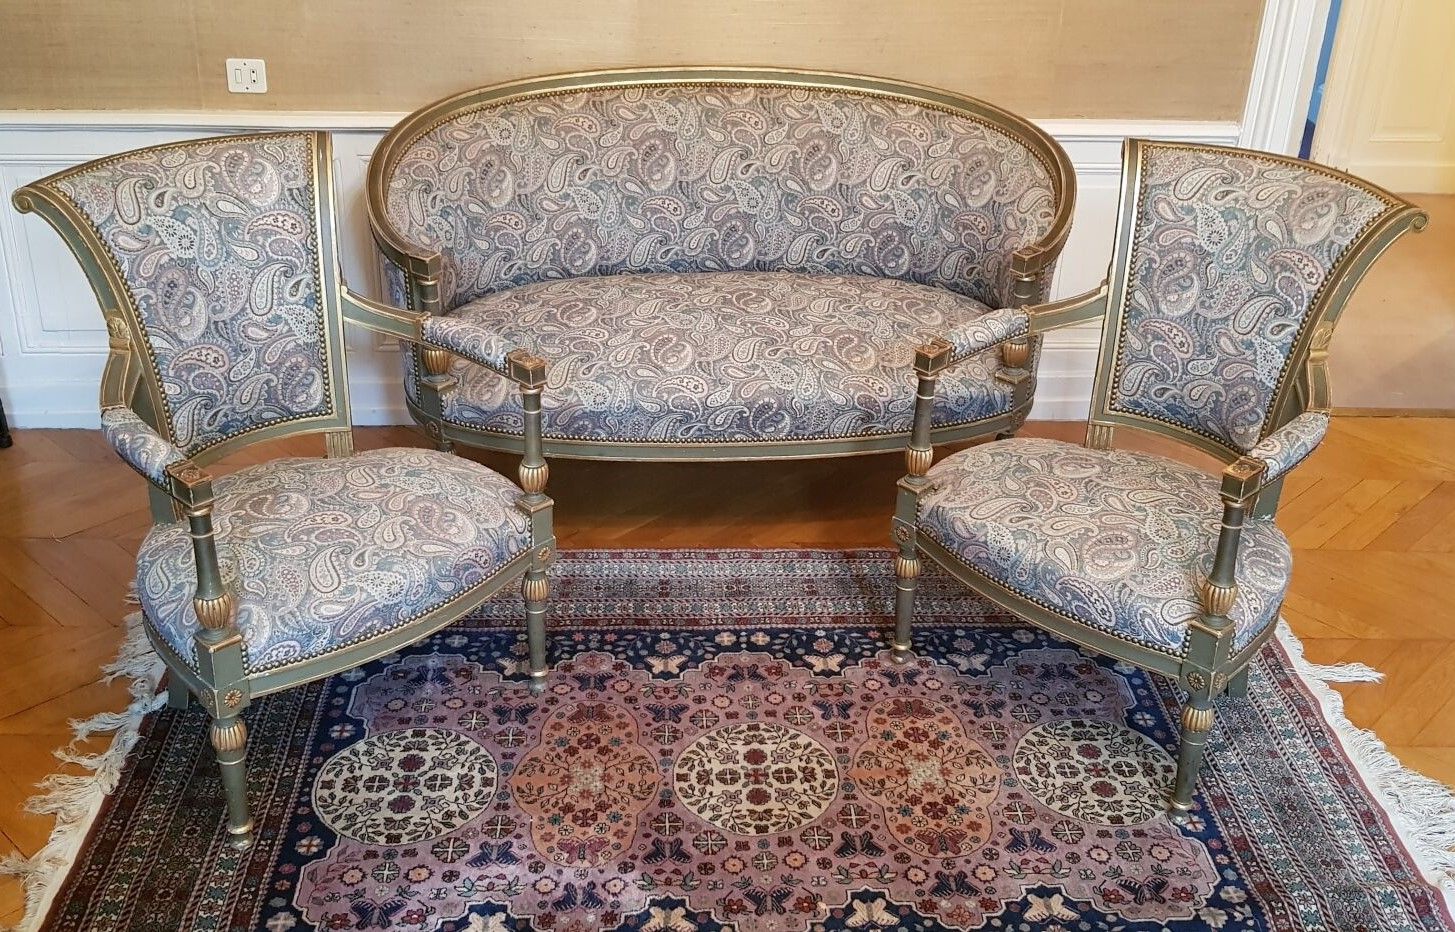 Null Salón de estilo Directoire con un sofá cesta y dos sillones
Siglo XX